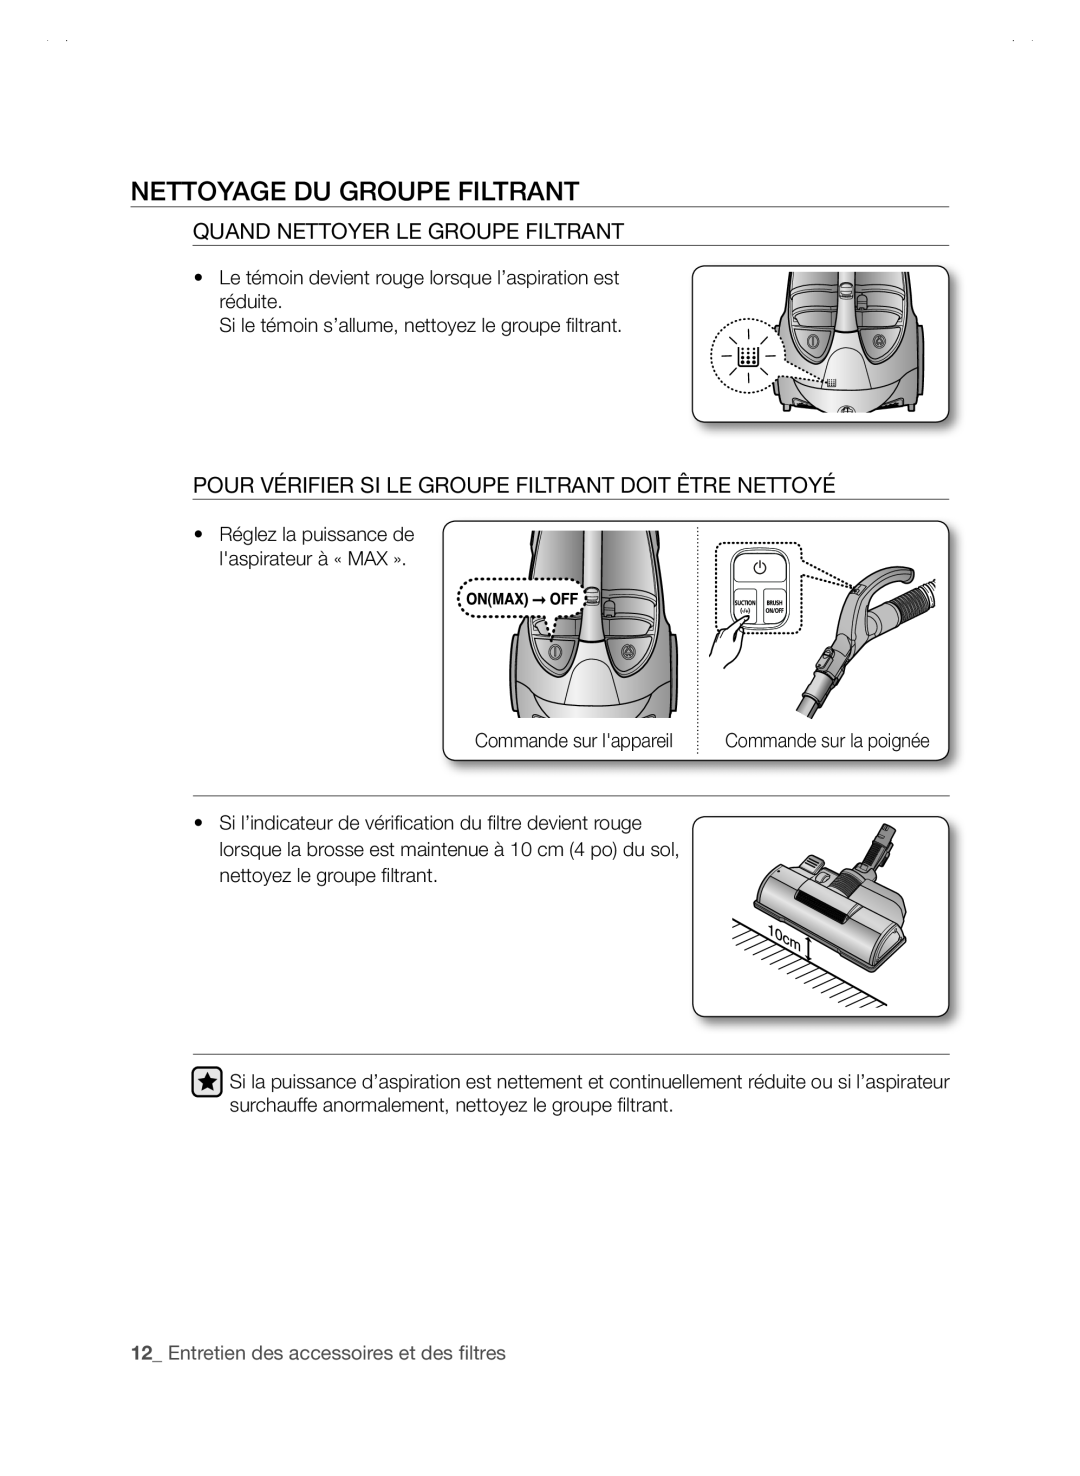 Samsung SC88P user manual Nettoyage Du Groupe Filtrant, Quand Nettoyer Le Groupe Filtrant 